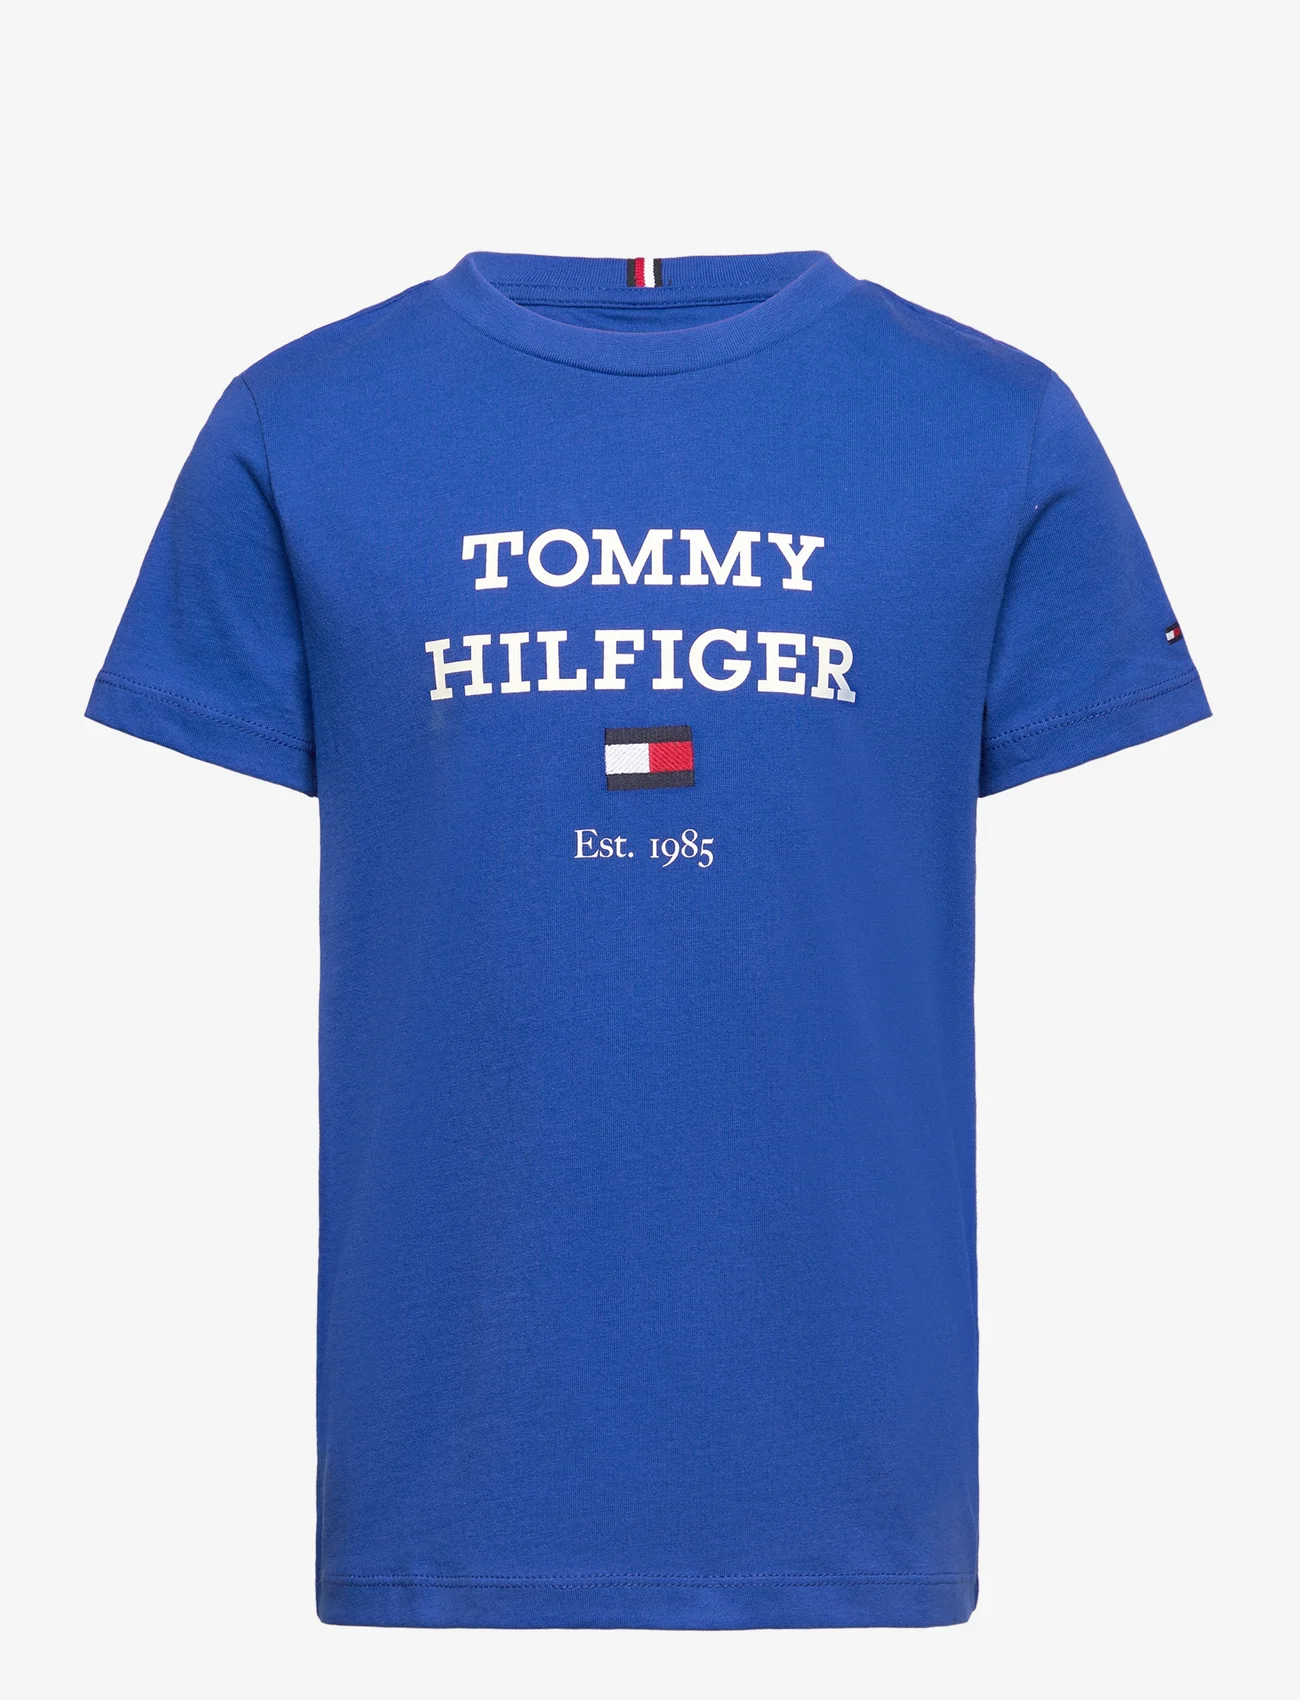 Tommy Hilfiger - TH LOGO TEE S/S - kortärmade t-shirts - ultra blue - 0